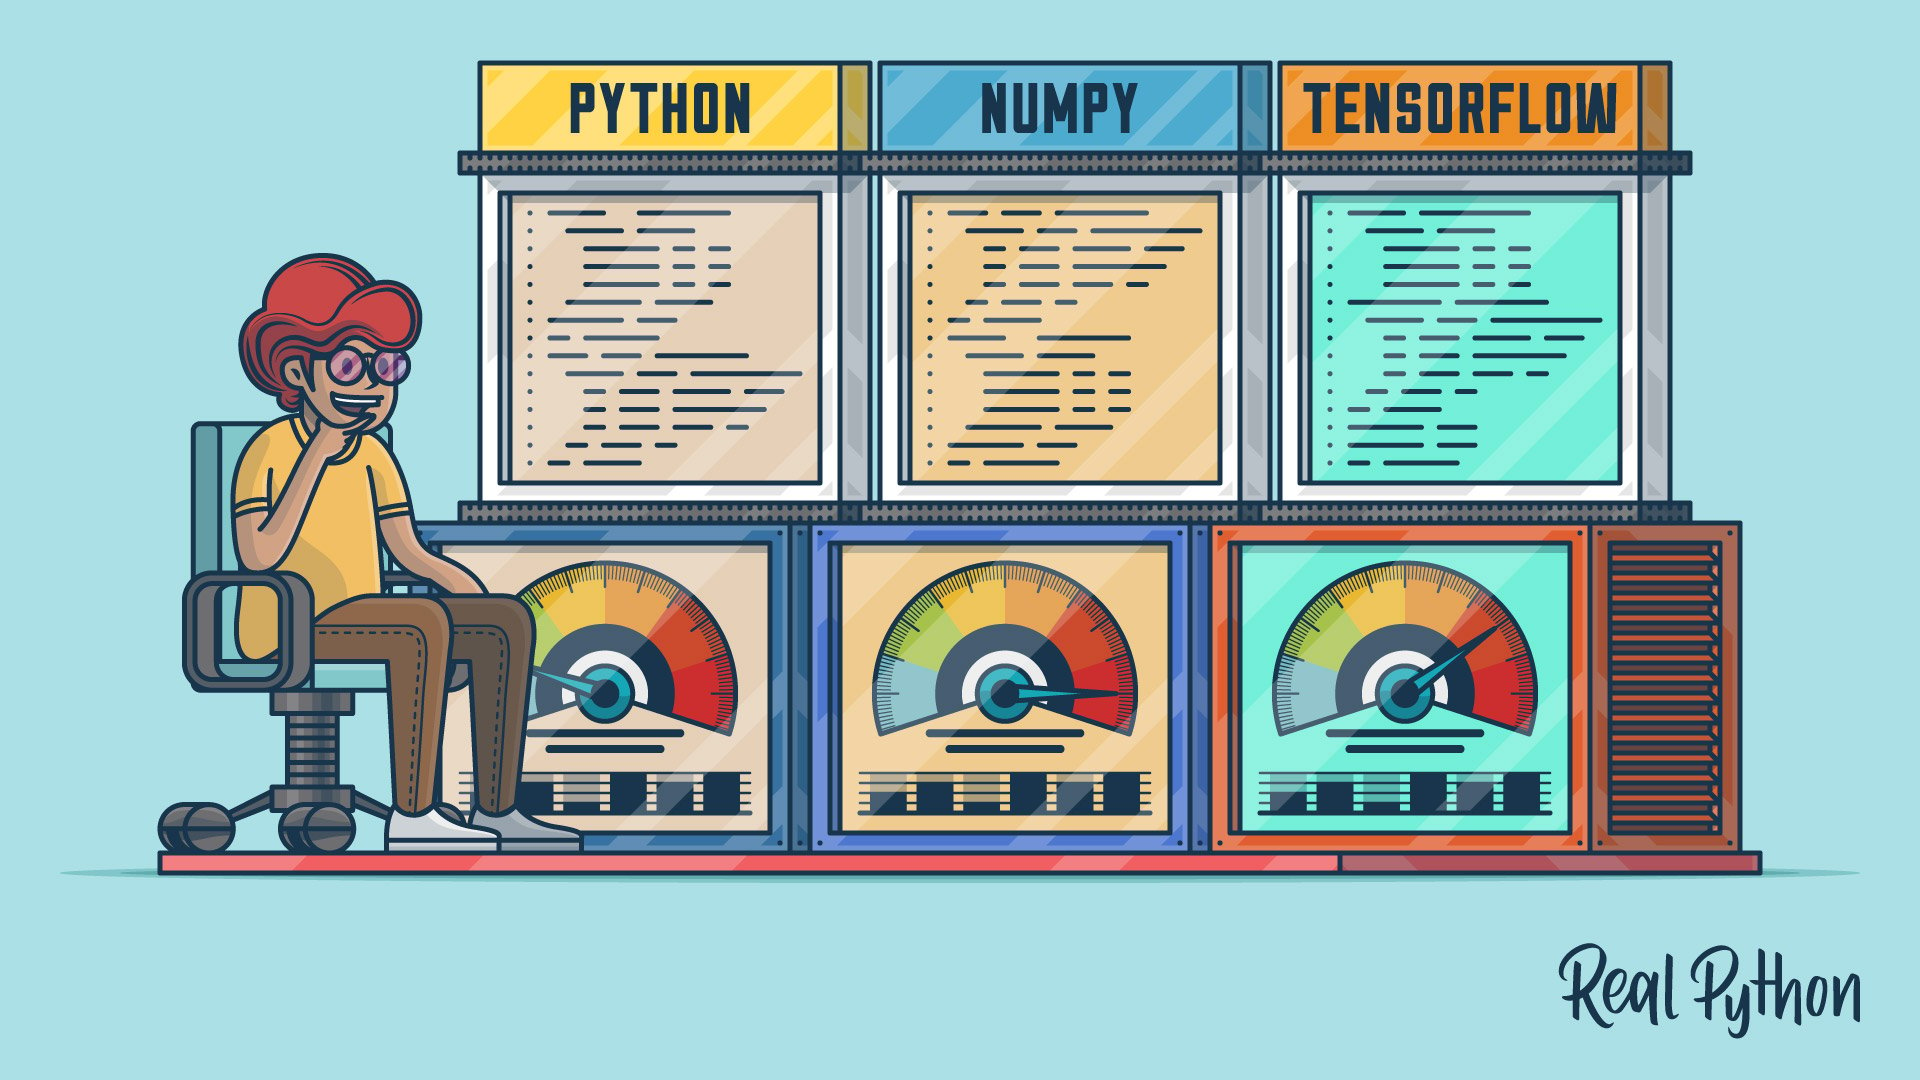 Pure Python vs NumPy vs TensorFlow performance comparison